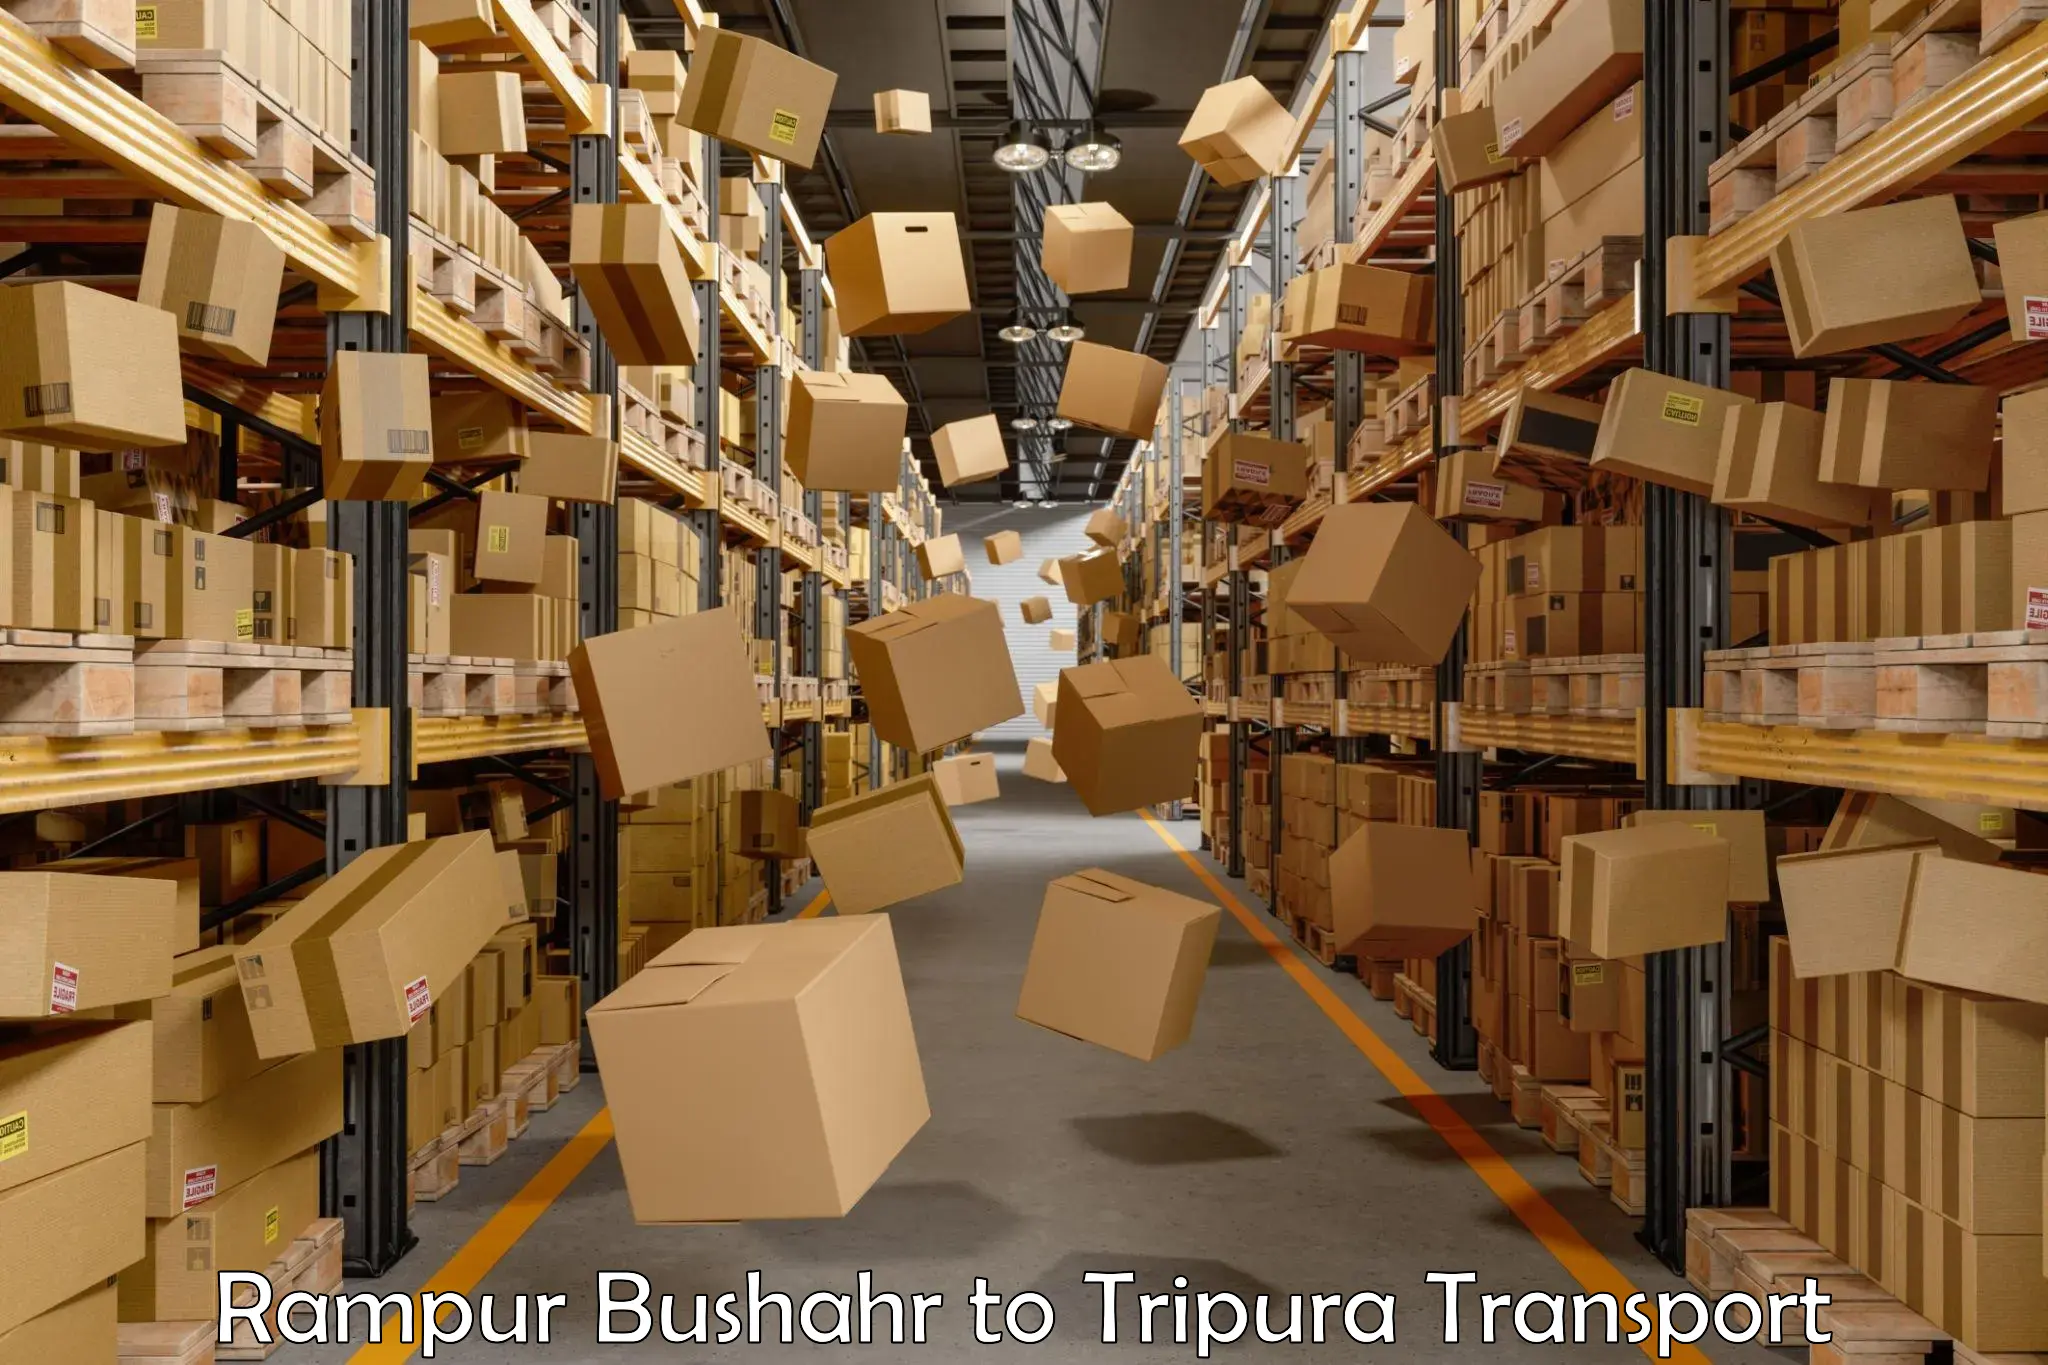 Delivery service Rampur Bushahr to Udaipur Tripura